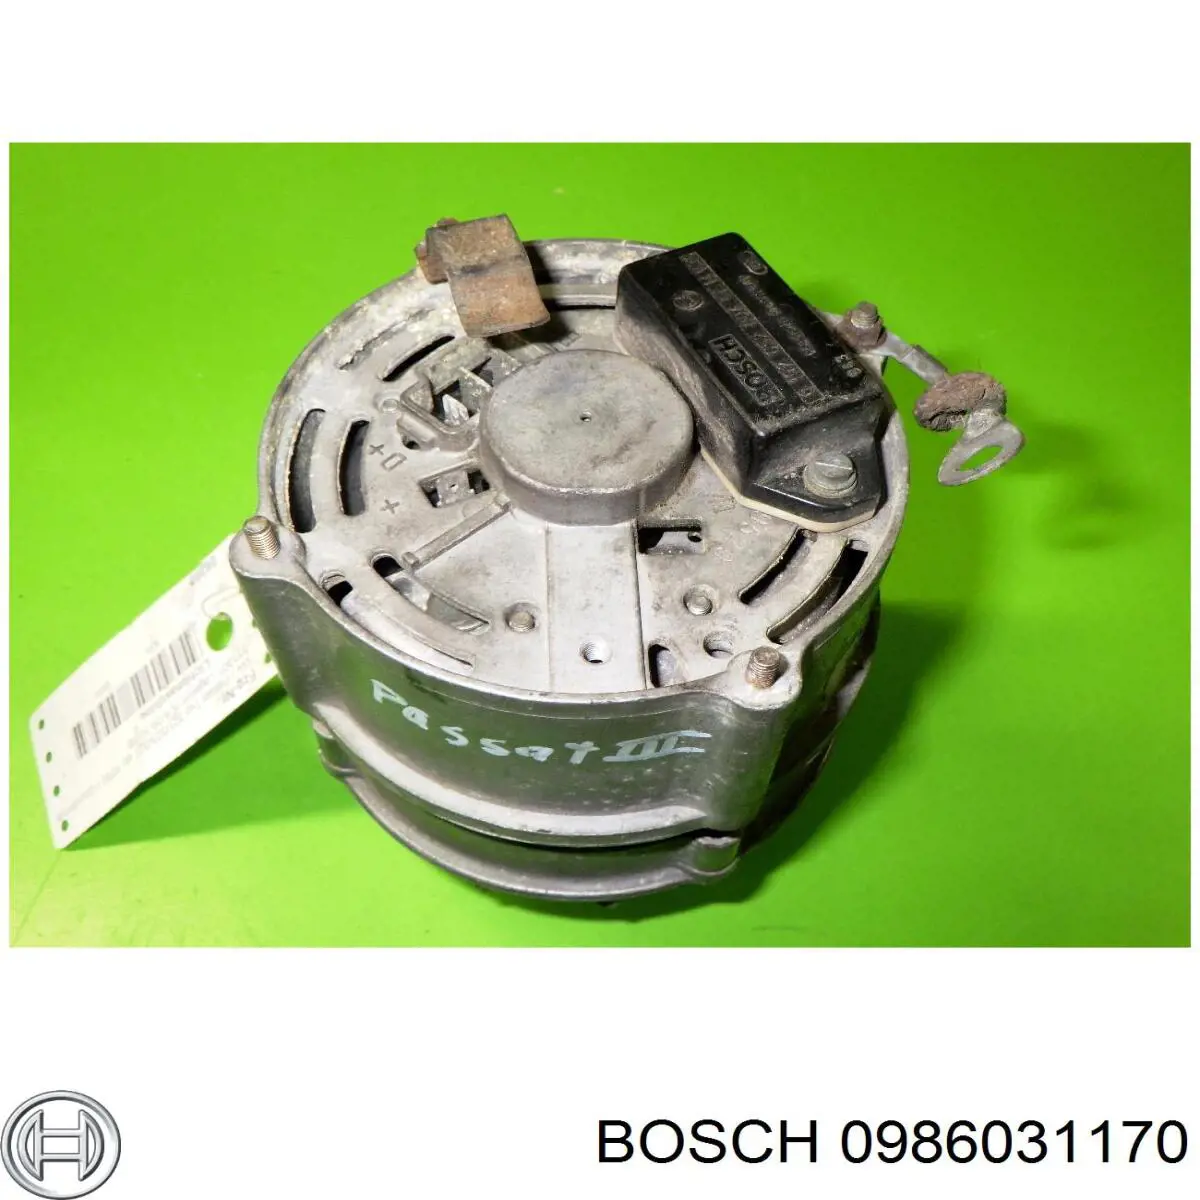 0986031170 Bosch alternador